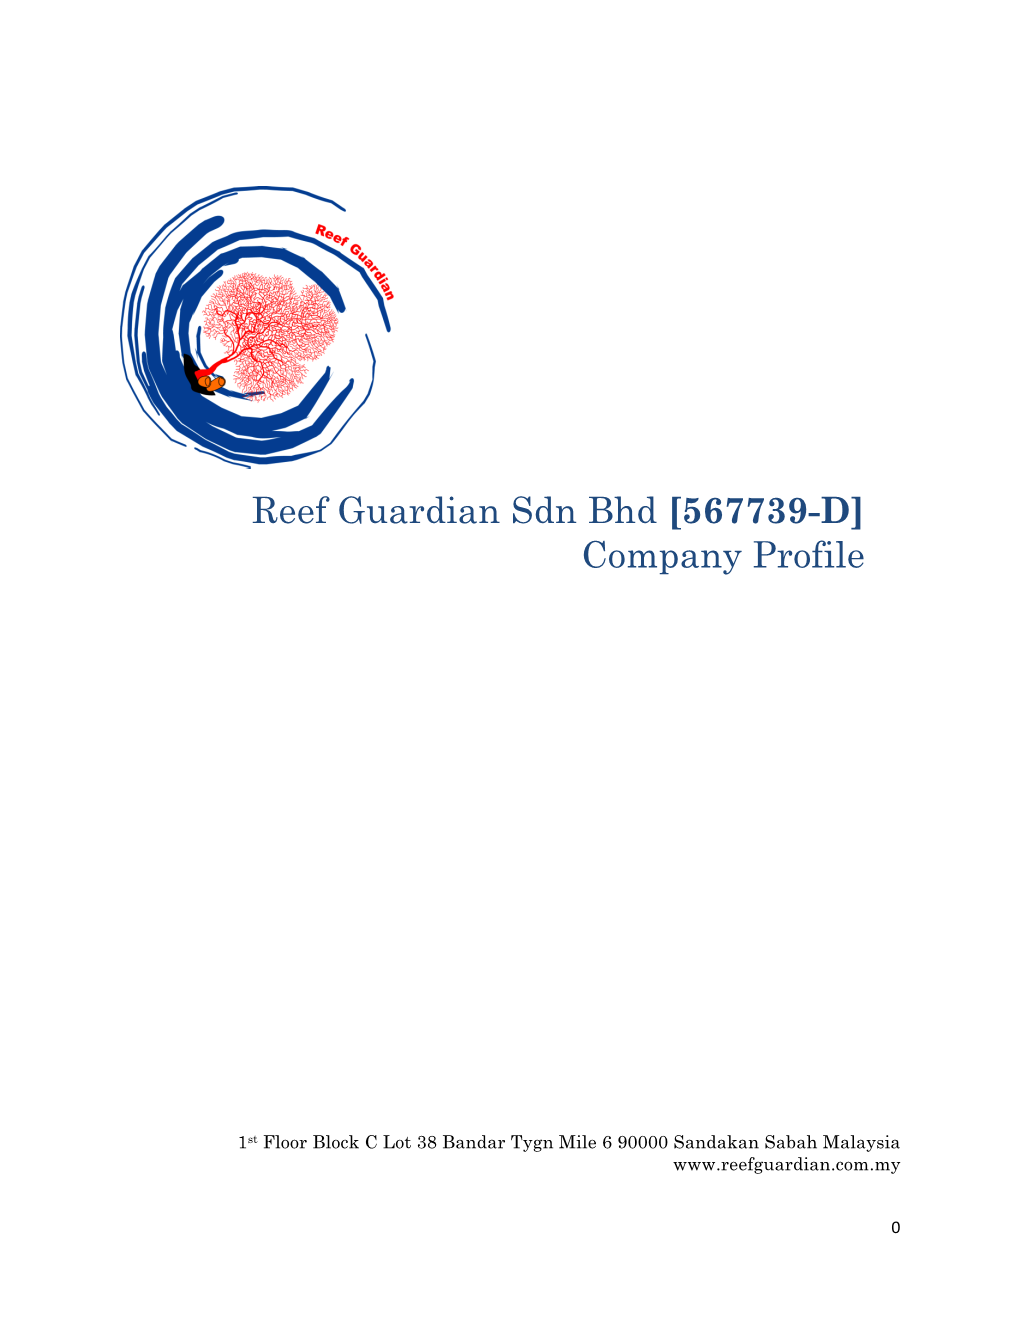 Reef Guardian Sdn Bhd [567739-D] Company Profile